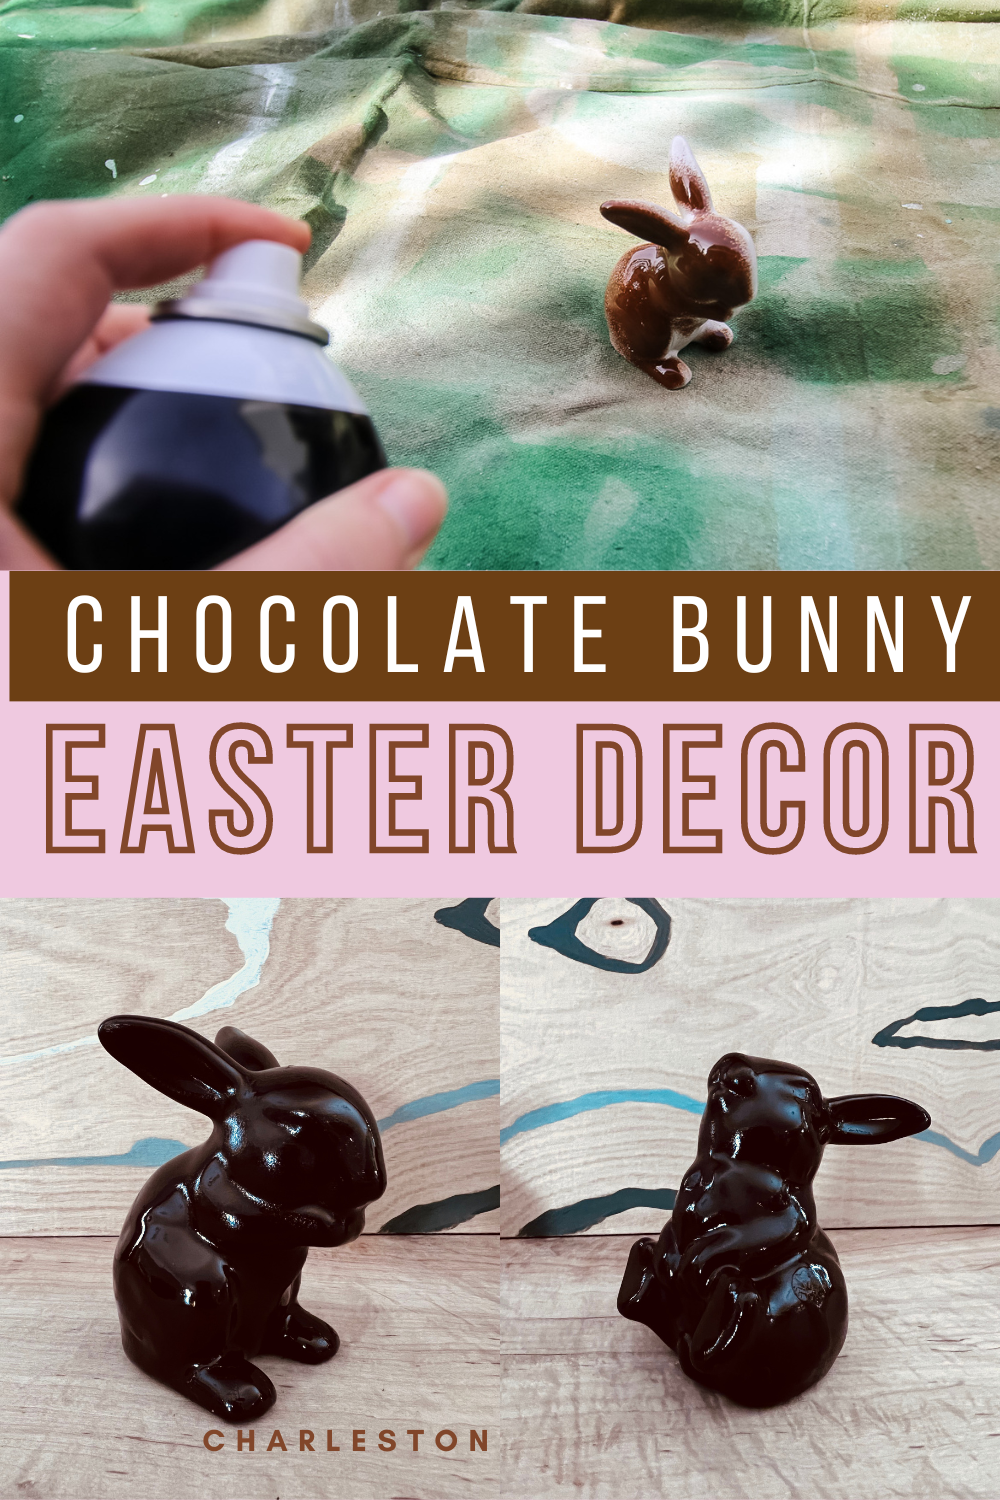 DIY chocolate easter bunnies